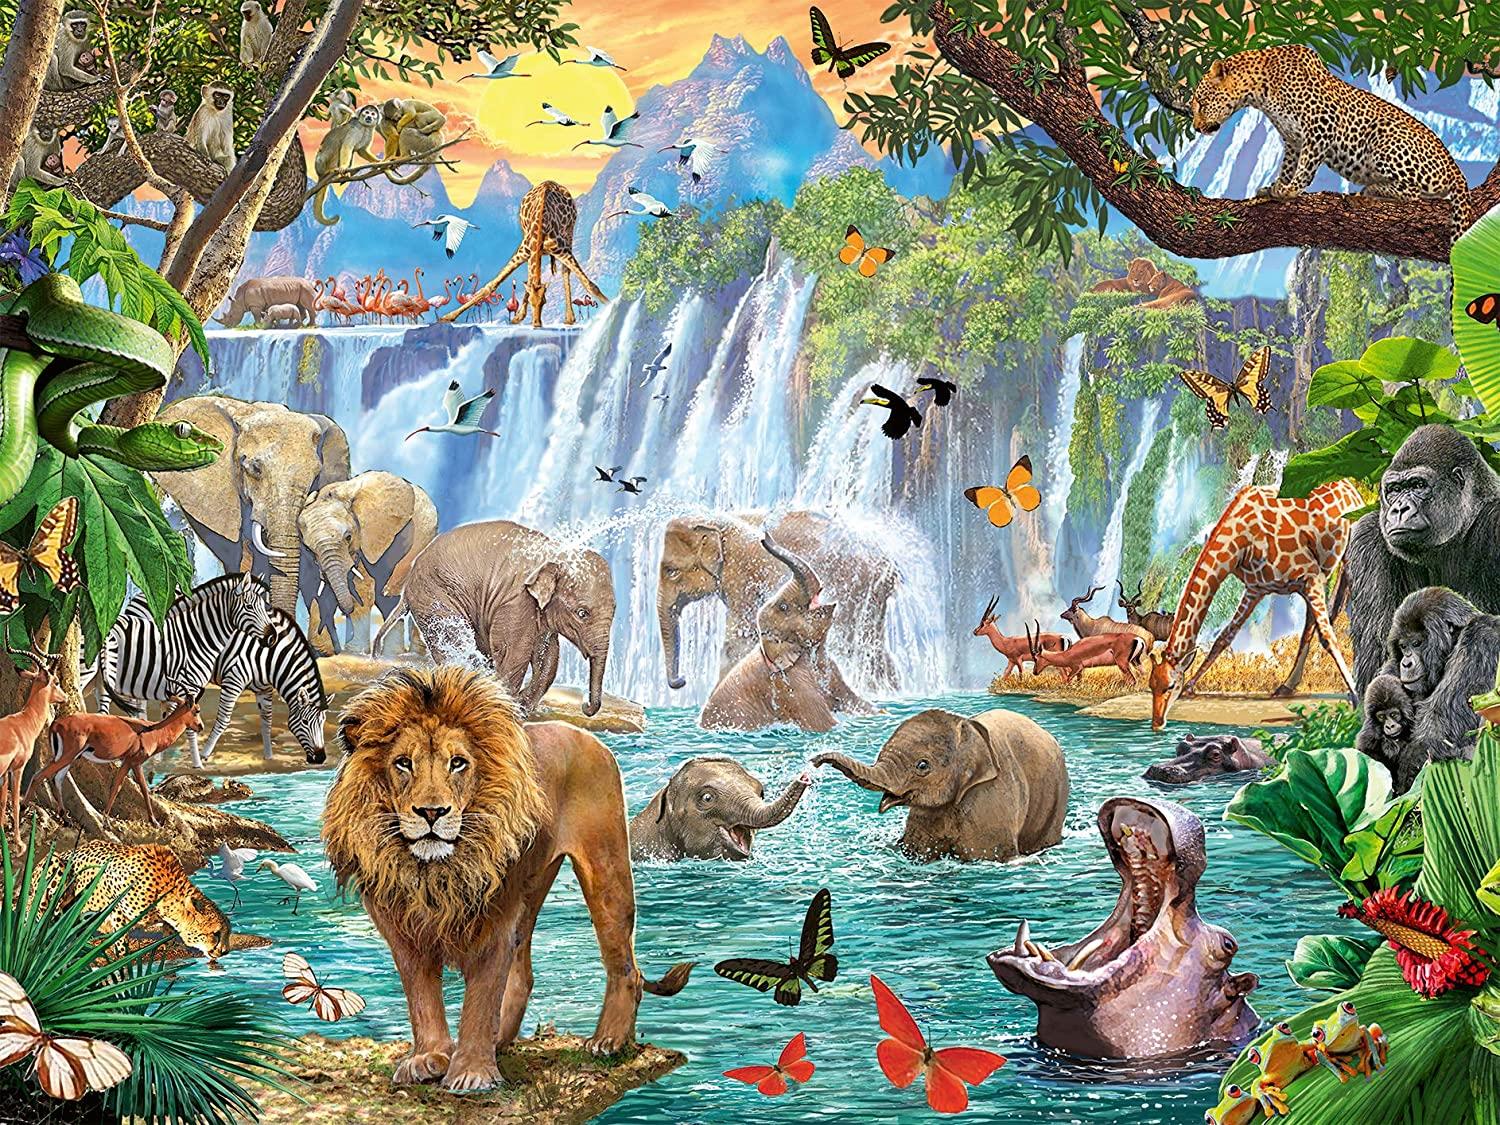 Ravensburger Waterfall Safari Jigsaw Puzzle (1500 Pieces)